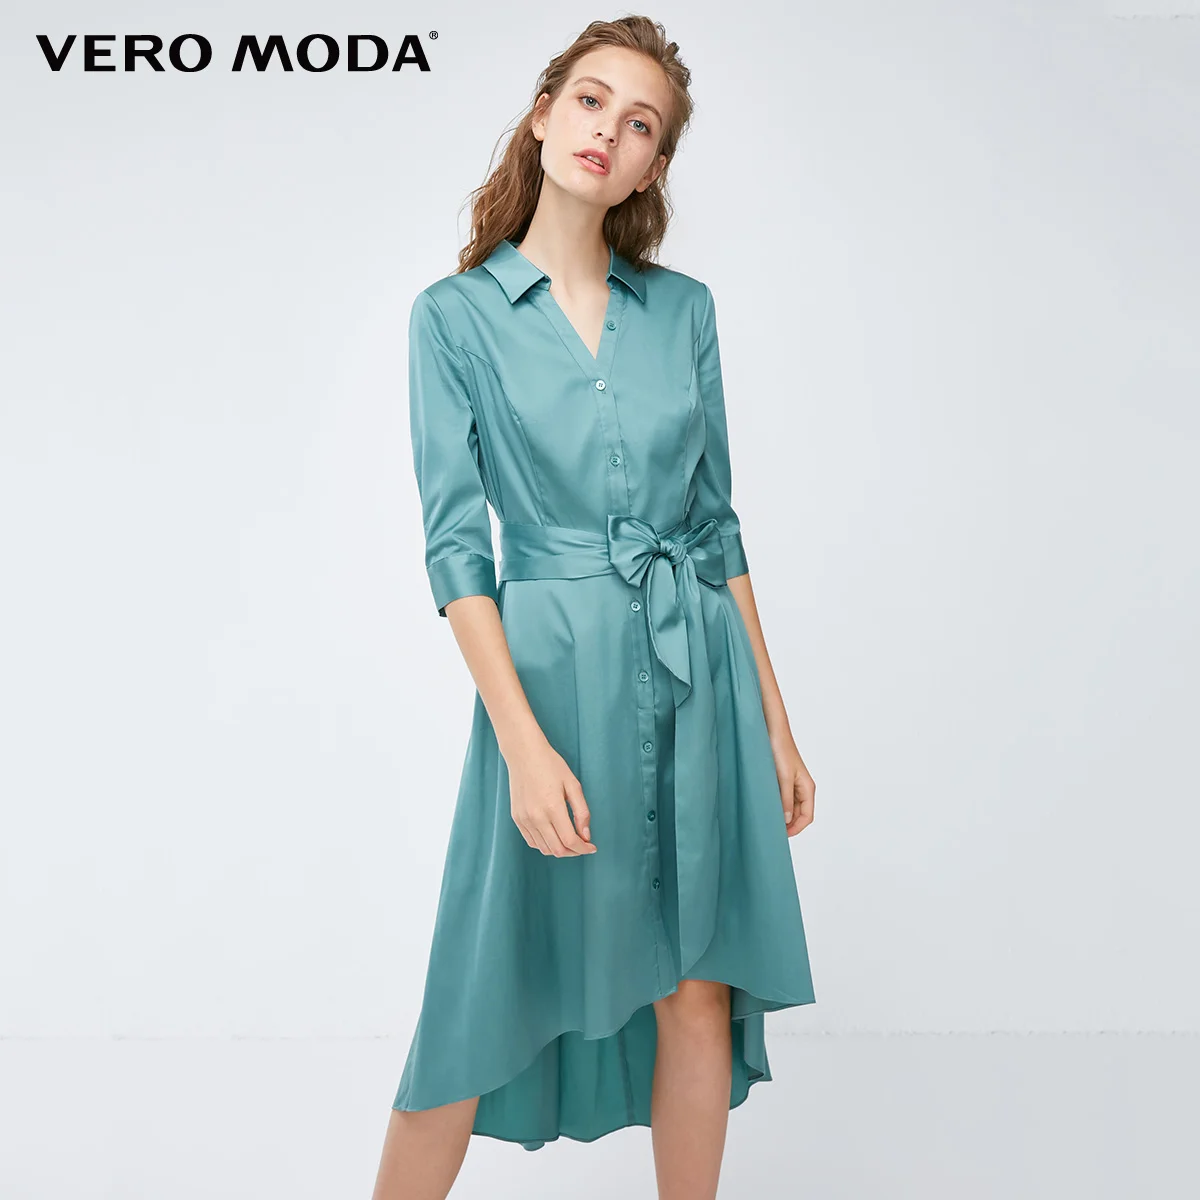 Vero Moda платье-рубашка с v-образным вырезом и рукавами три четверти | 31837C519 - Цвет: Seaweed green